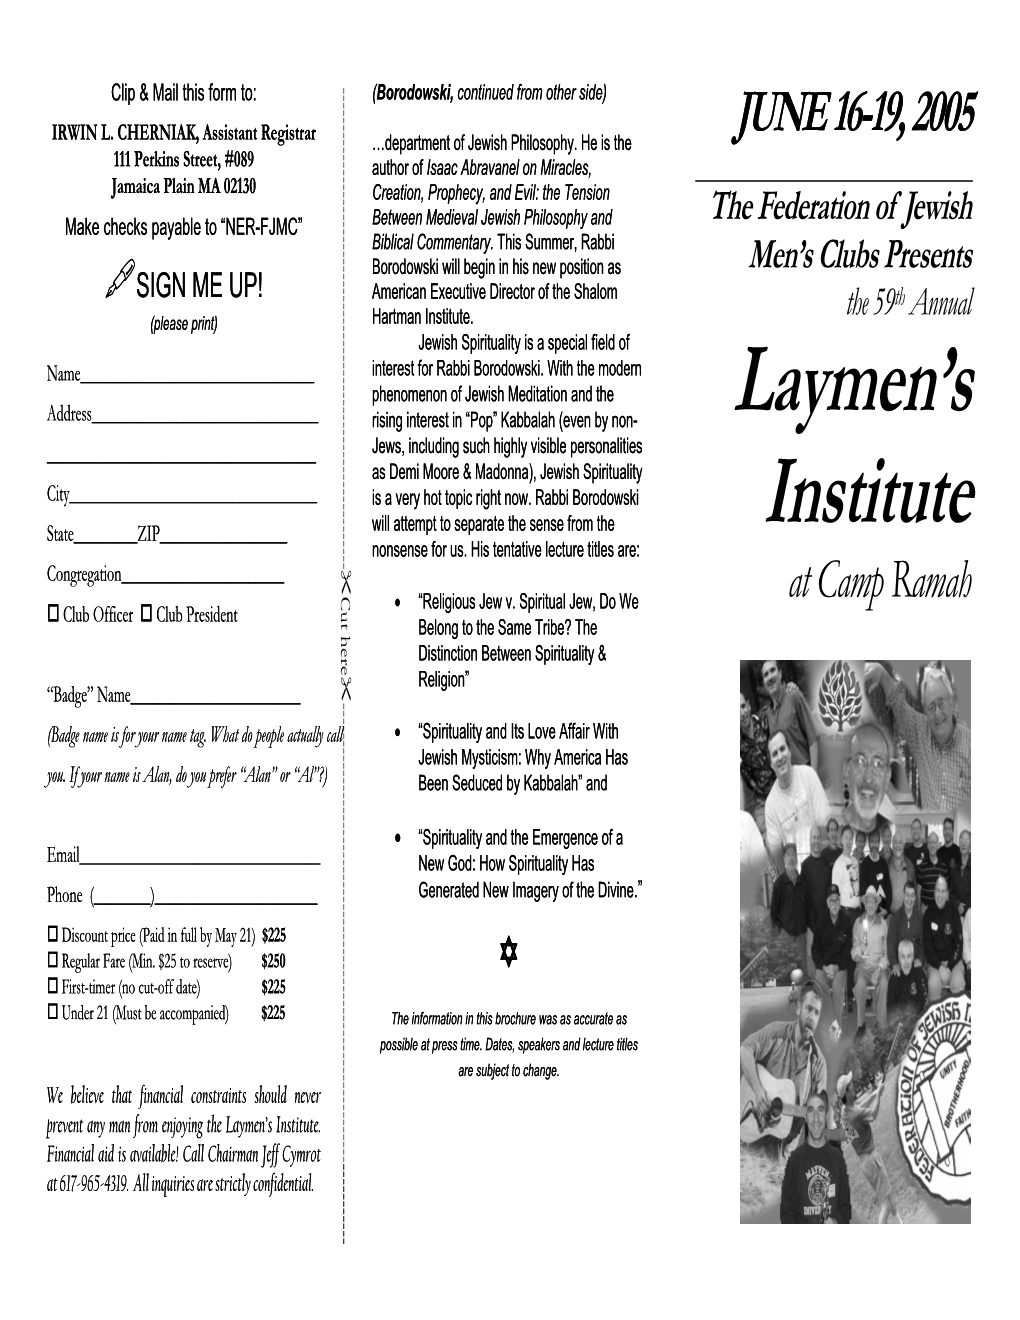 Laymen's Institute in 2005 for His Eat Plenty of Great Kosher Food